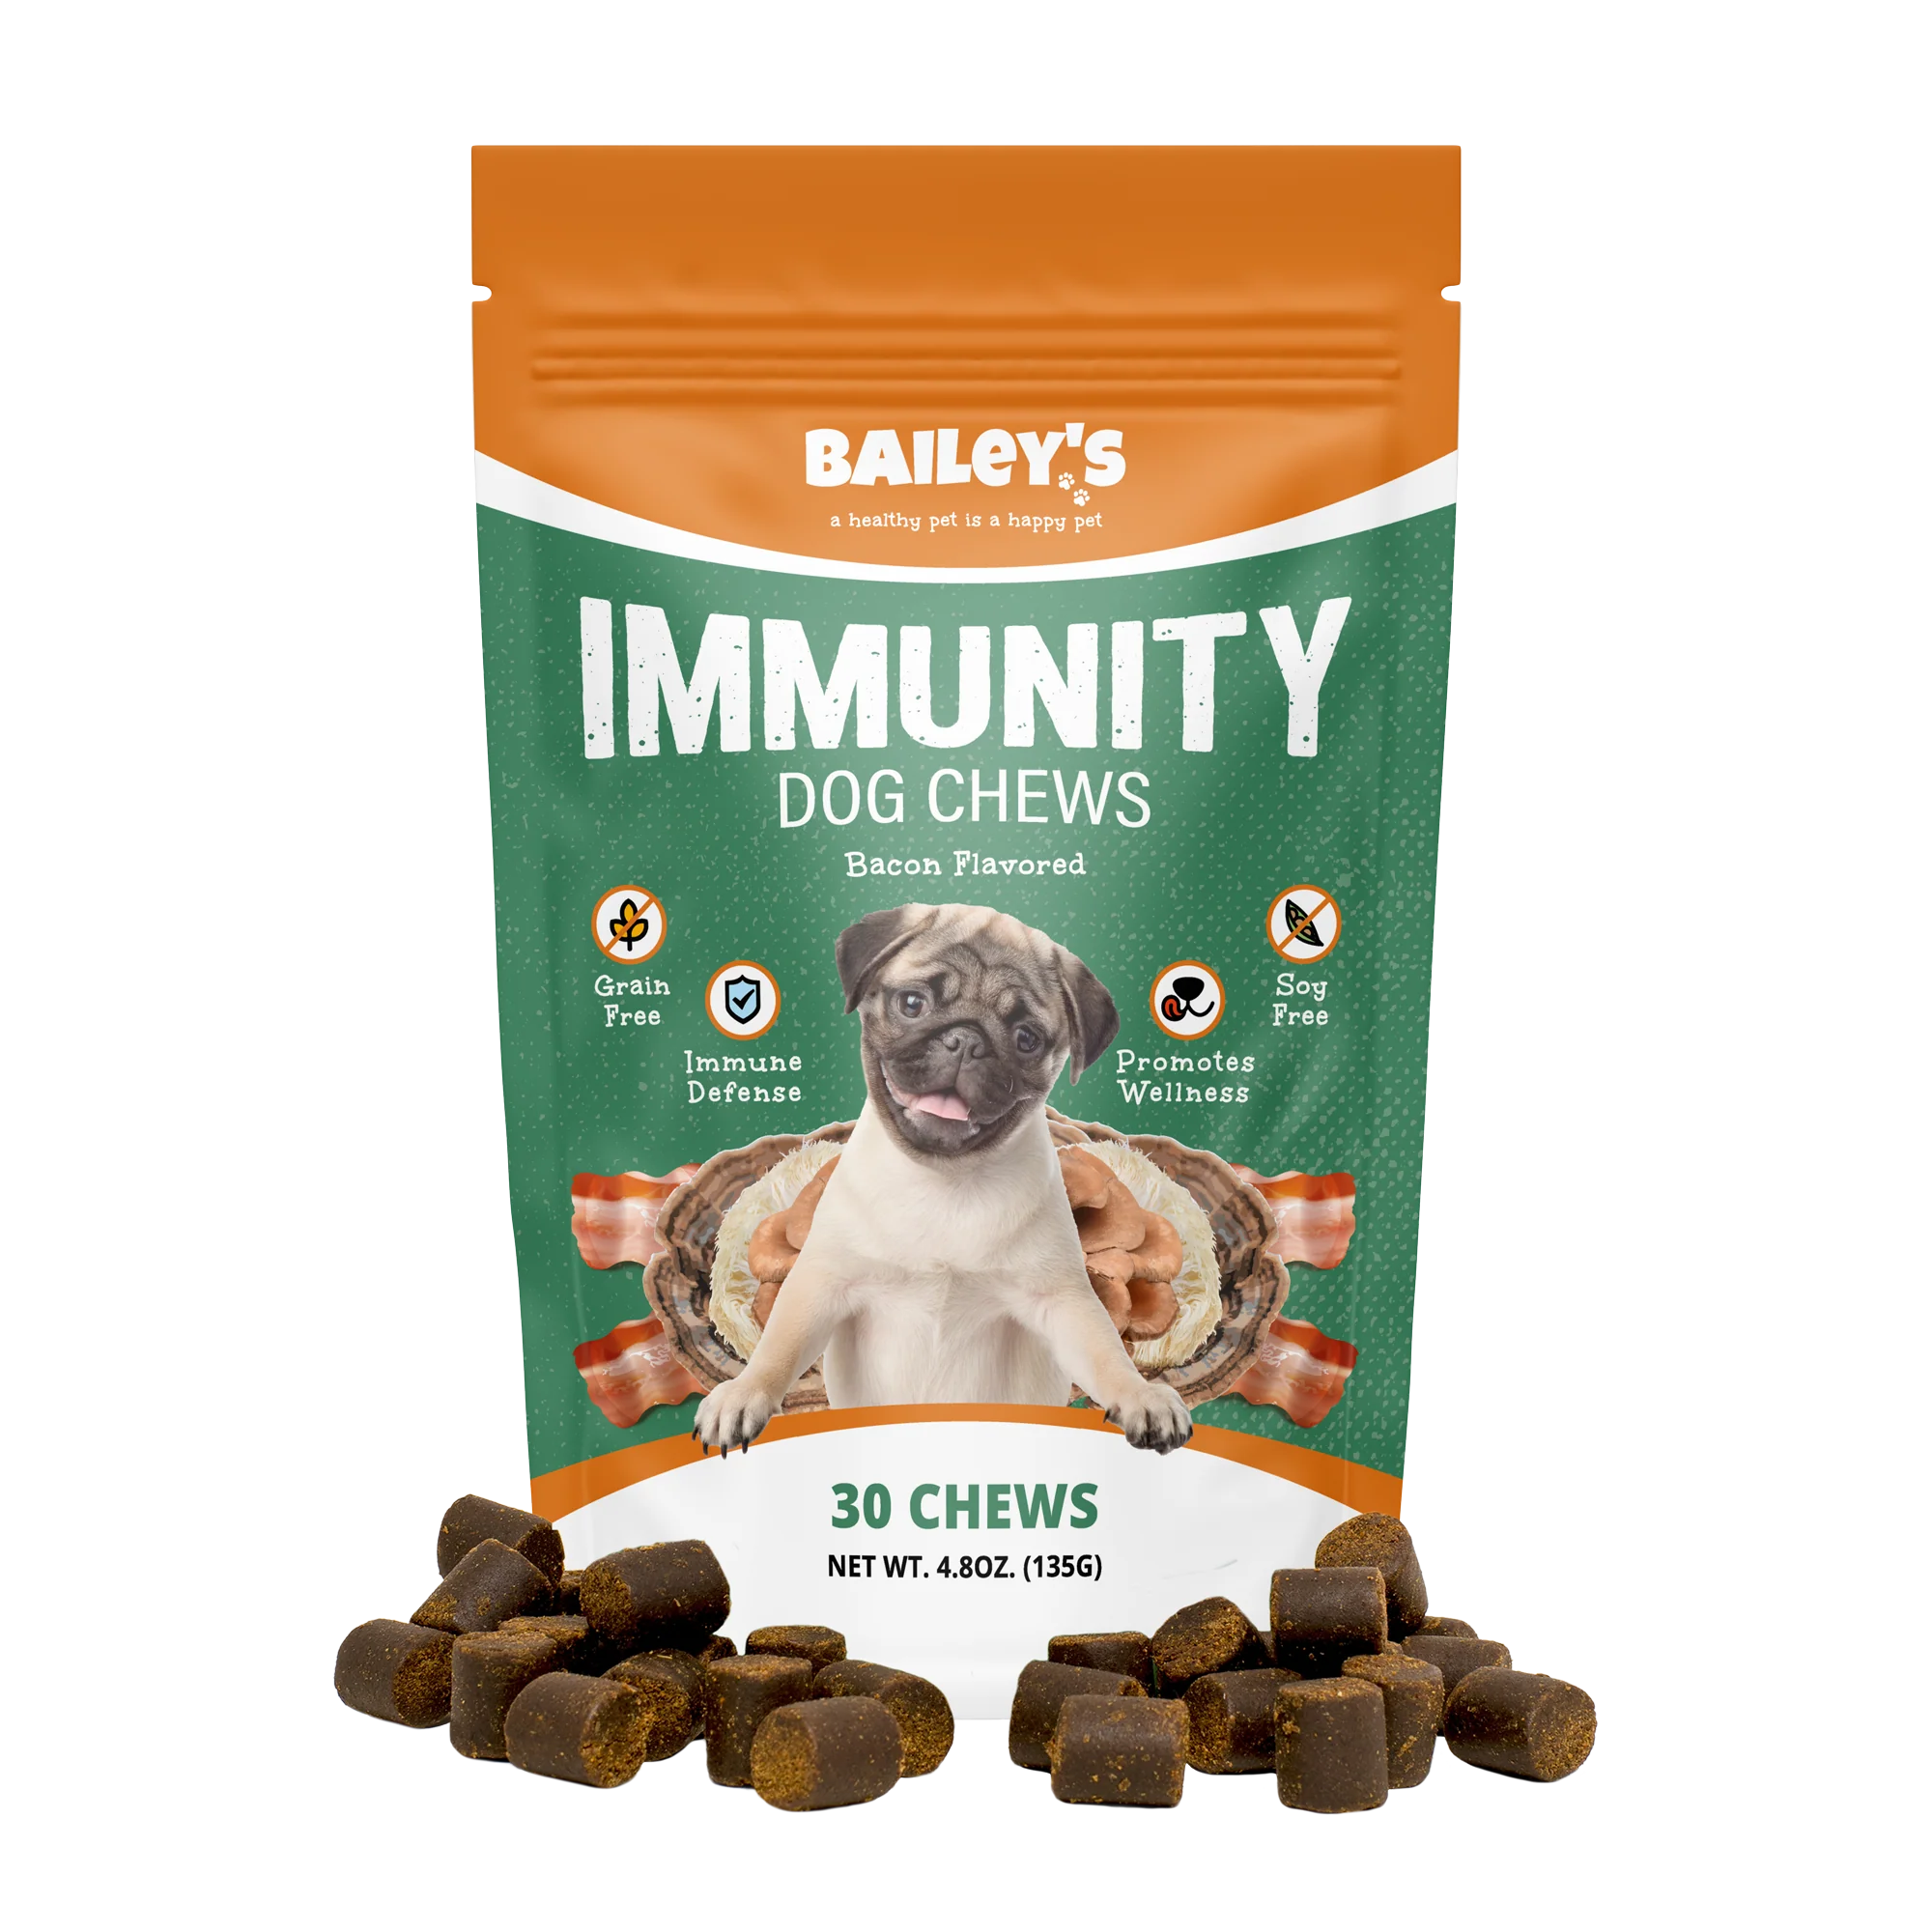 BAILEYS Immunity Dog Chews